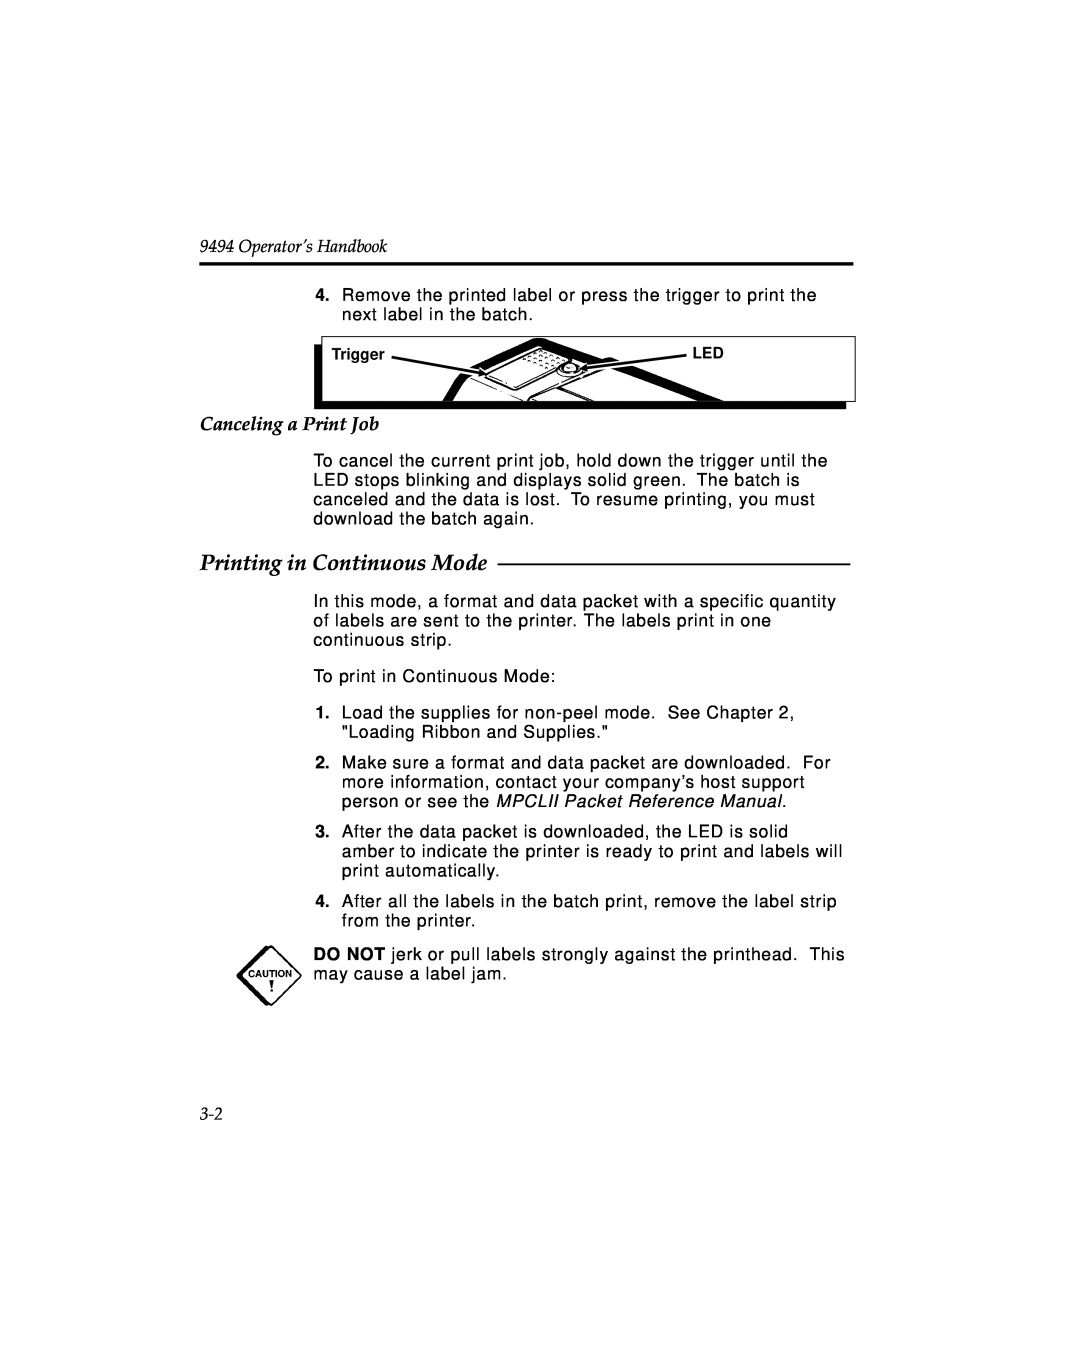 Monarch 9494 manual Printing in Continuous Mode, Canceling a Print Job, Operators Handbook 